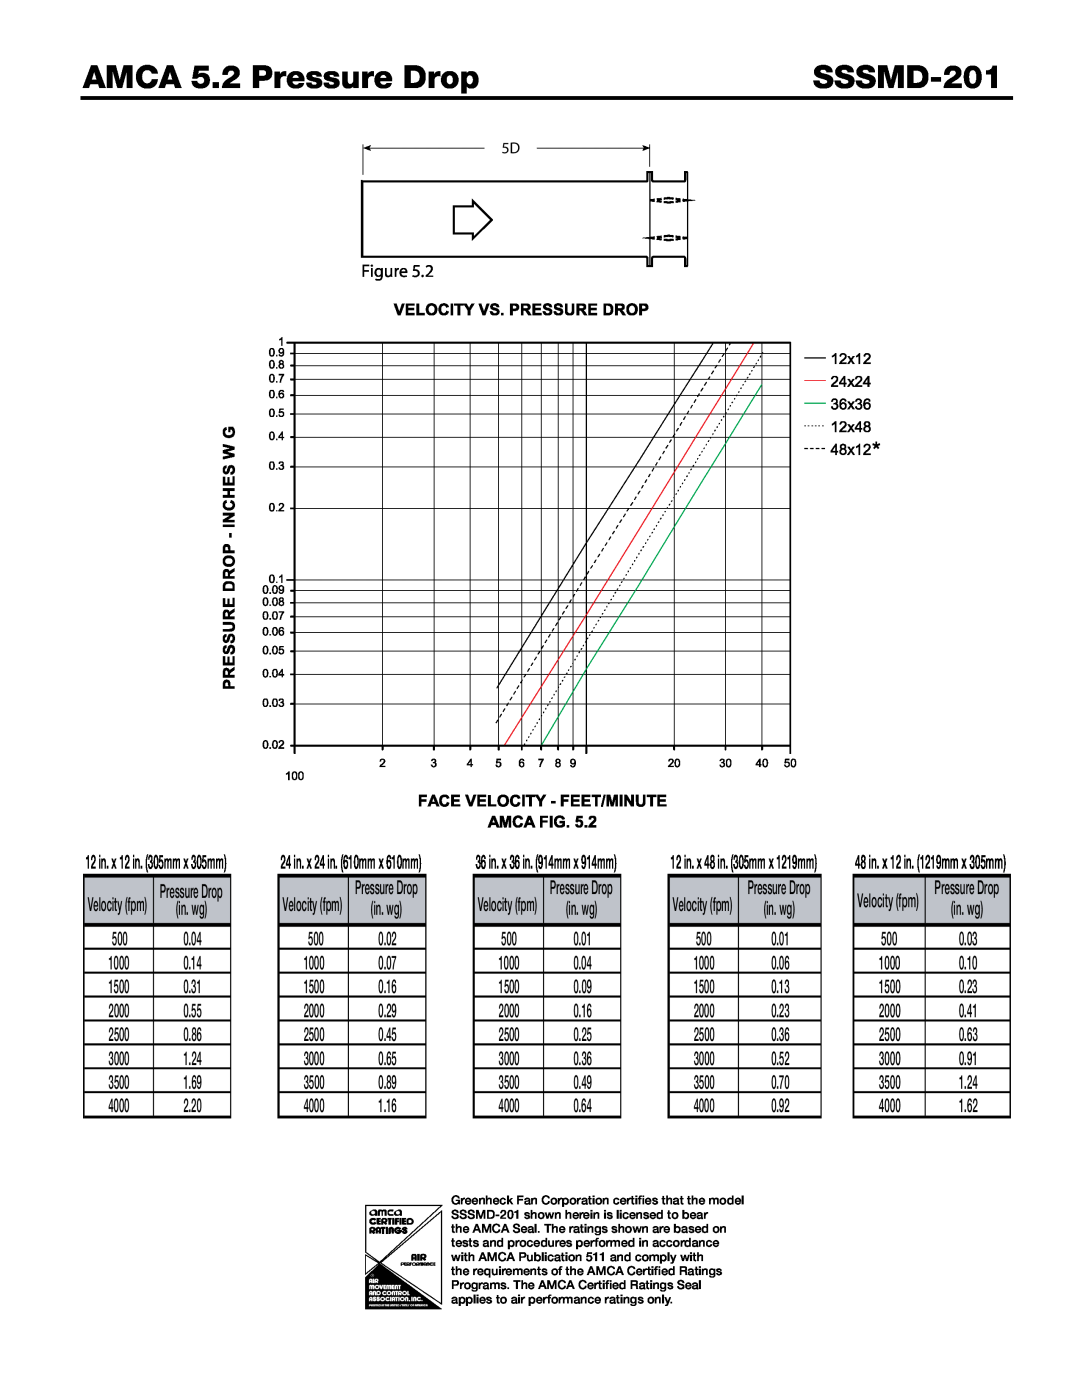 Greenheck Fan SSSMD-201 dimensions AMCA 5.2 Pressure Drop, 1000, 1500, 2000, 2500, 3000, 3500, 4000 